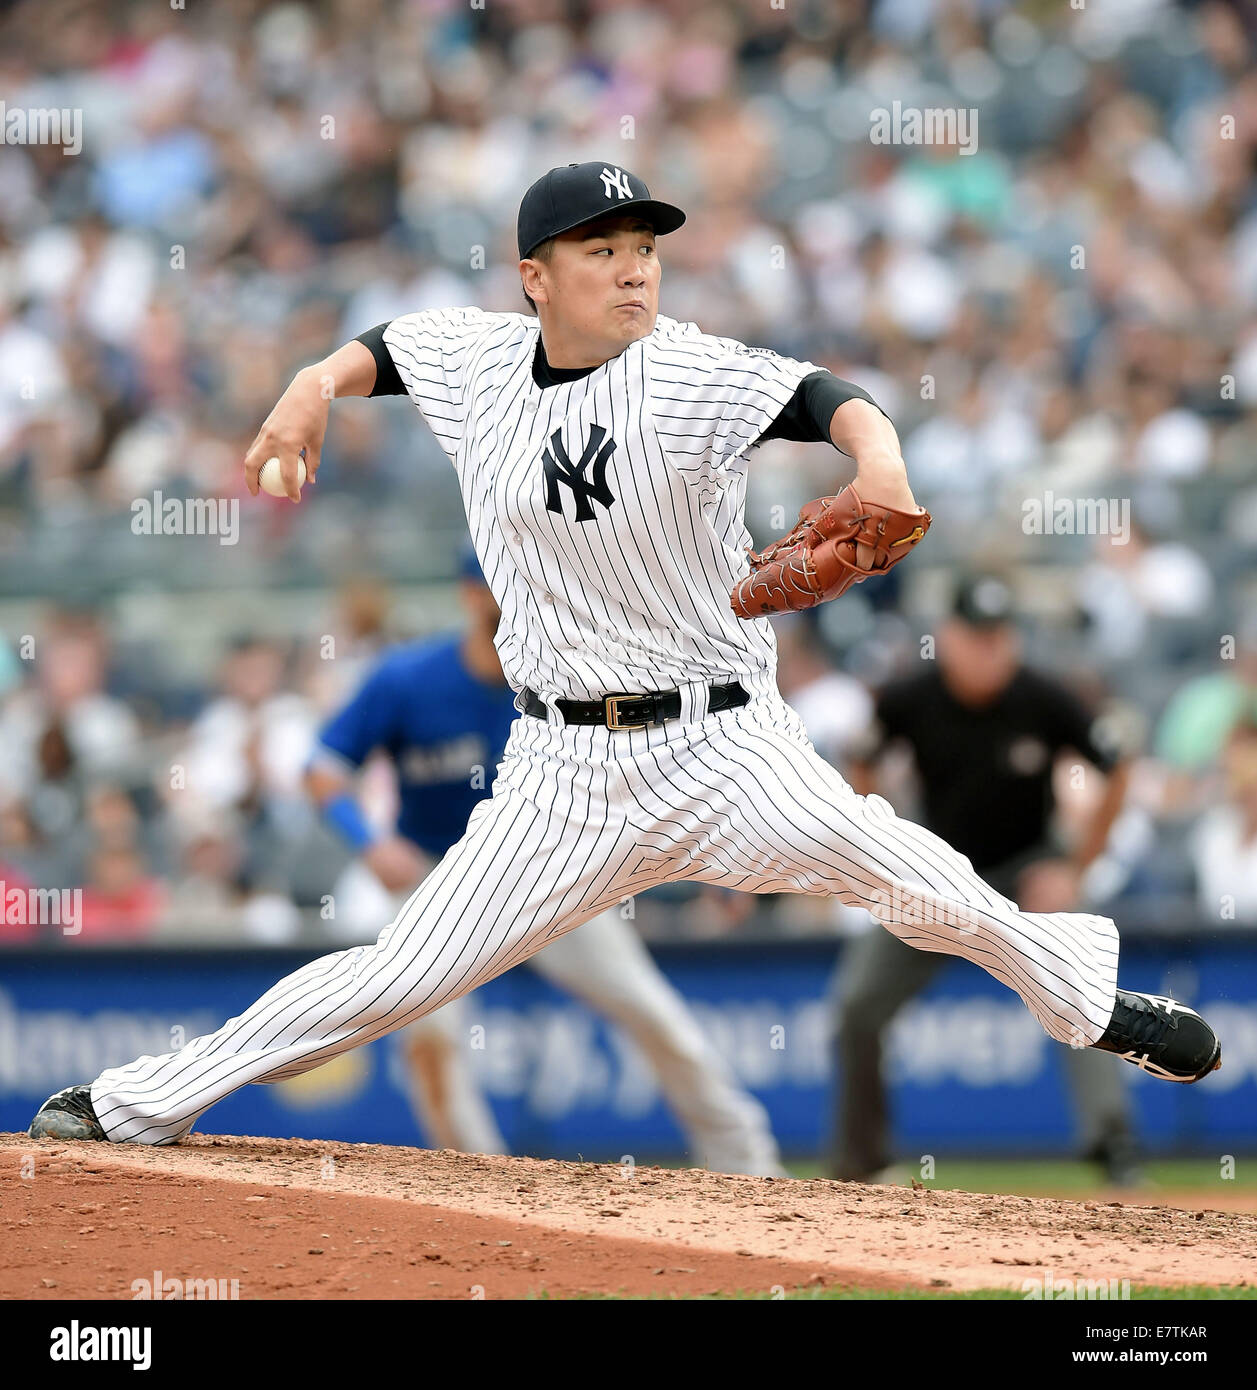 Masahiro Tanaka (Yankees), Settembre 21, 2014 - MLB : Masahiro Tanaka dei New York Yankees piazzole durante il Major League Baseball gioco contro il Toronto Blue Jays allo Yankee Stadium nel Bronx, New York, Stati Uniti. (Foto di AFLO) Foto Stock